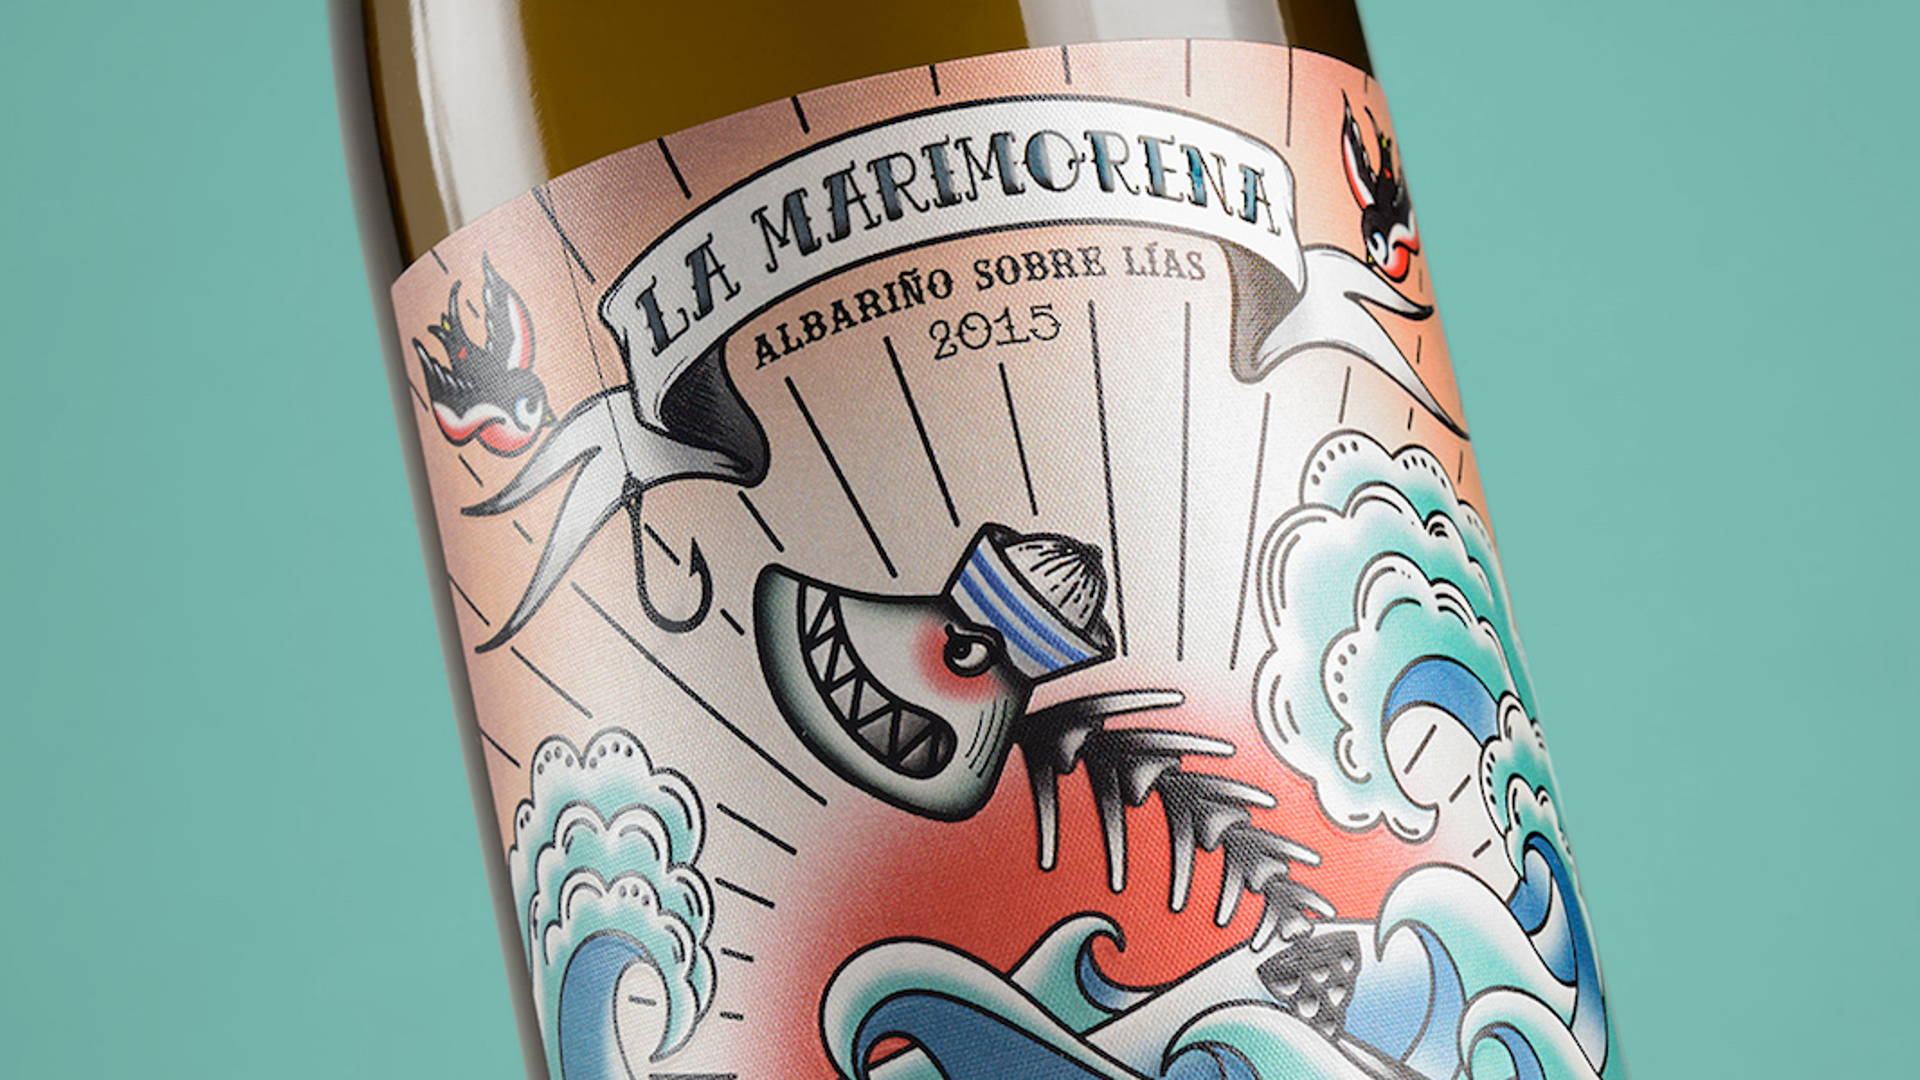 Featured image for La Marimorena 2015 Wine